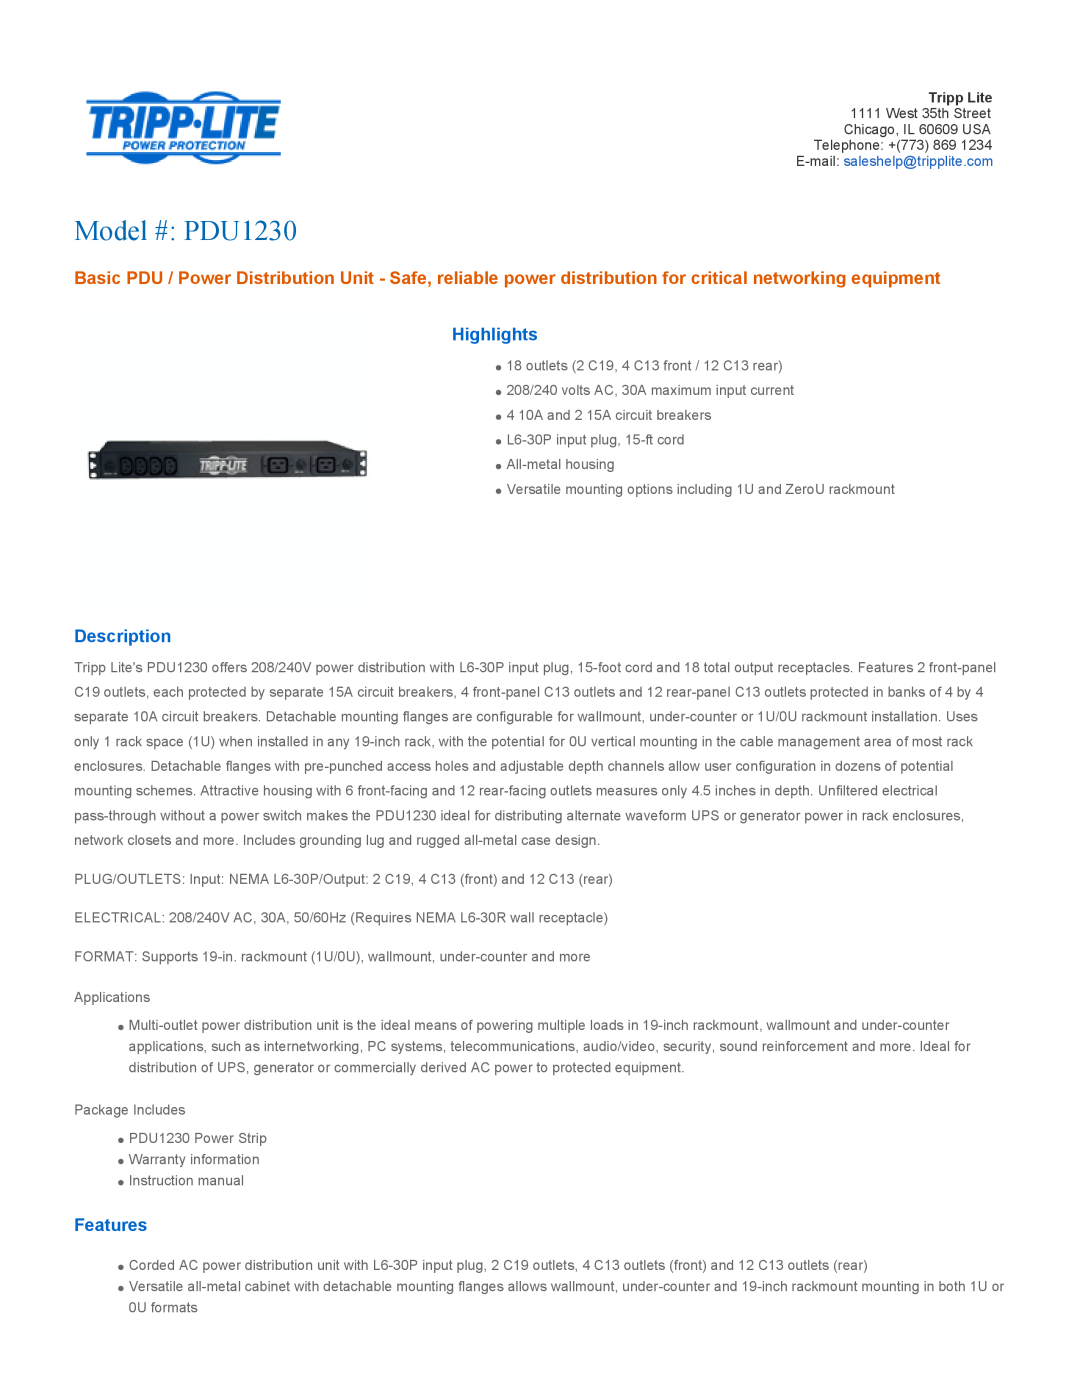 Tripp Lite warranty Highlights, Description, Features, Model # PDU1230 